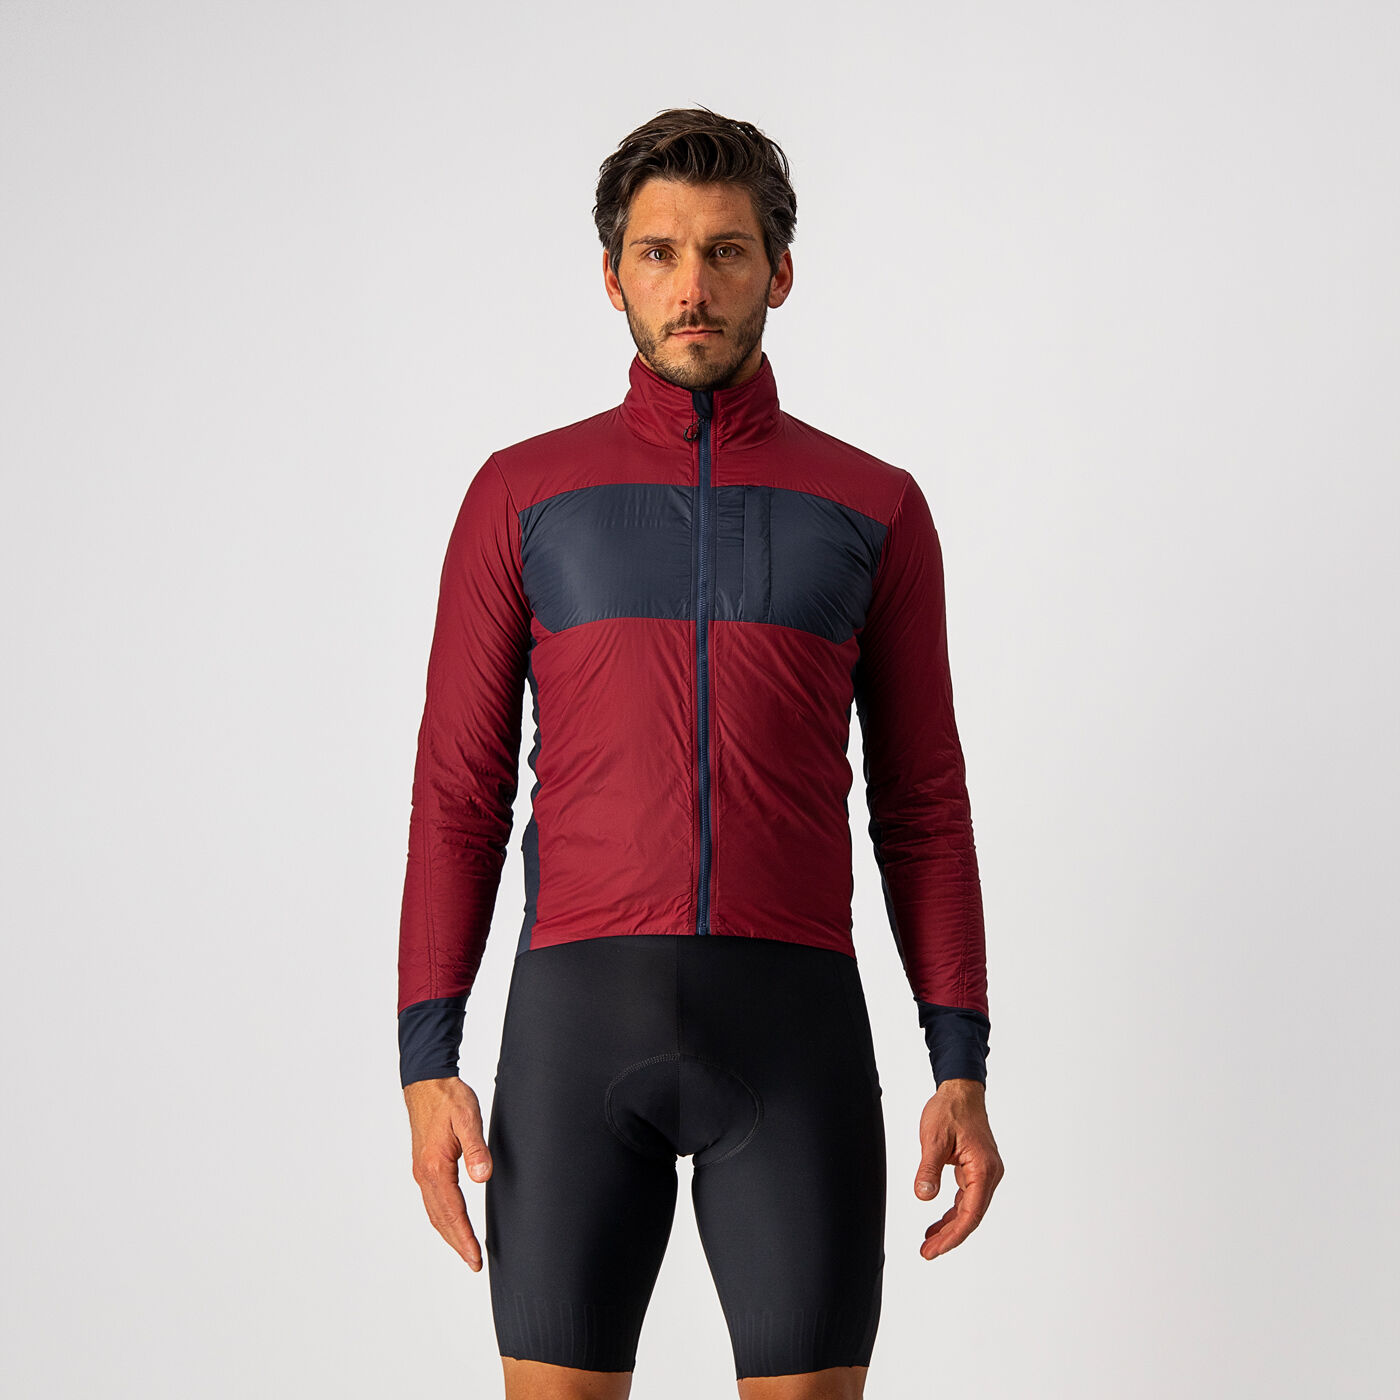 Castelli Unlimited Puffy Jacket - Cycling jacket - Men's